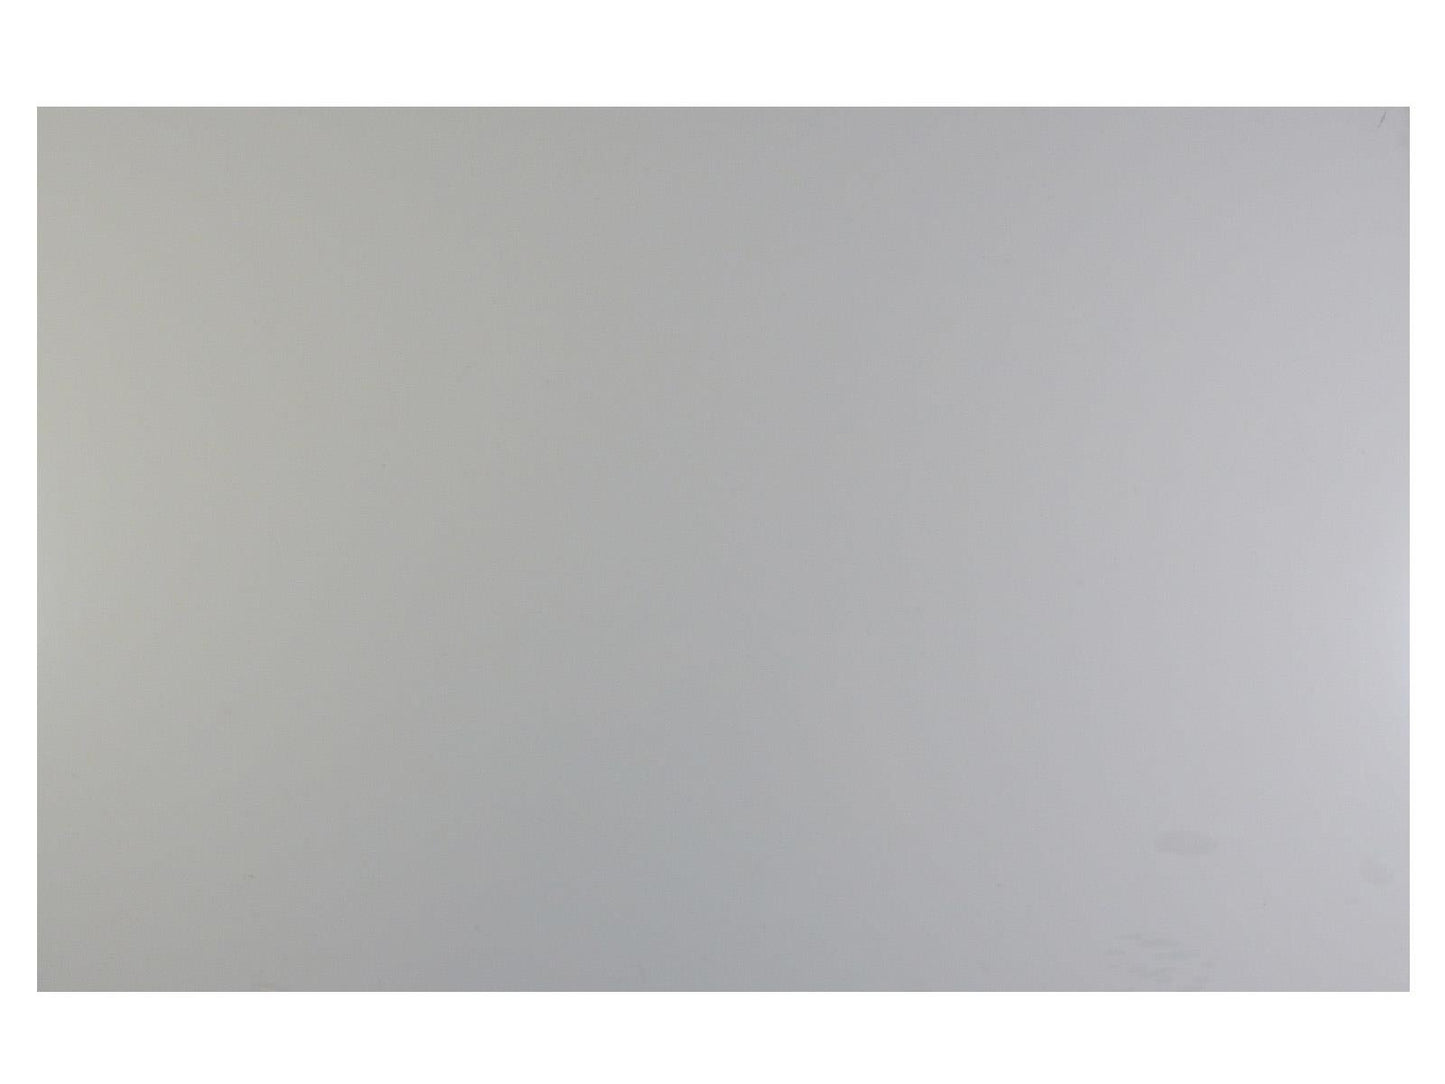 Borderlands White/Black/White Plain PVC Sheet - 430x290x2mm (16.9x11.42x0.08"), 3-Ply